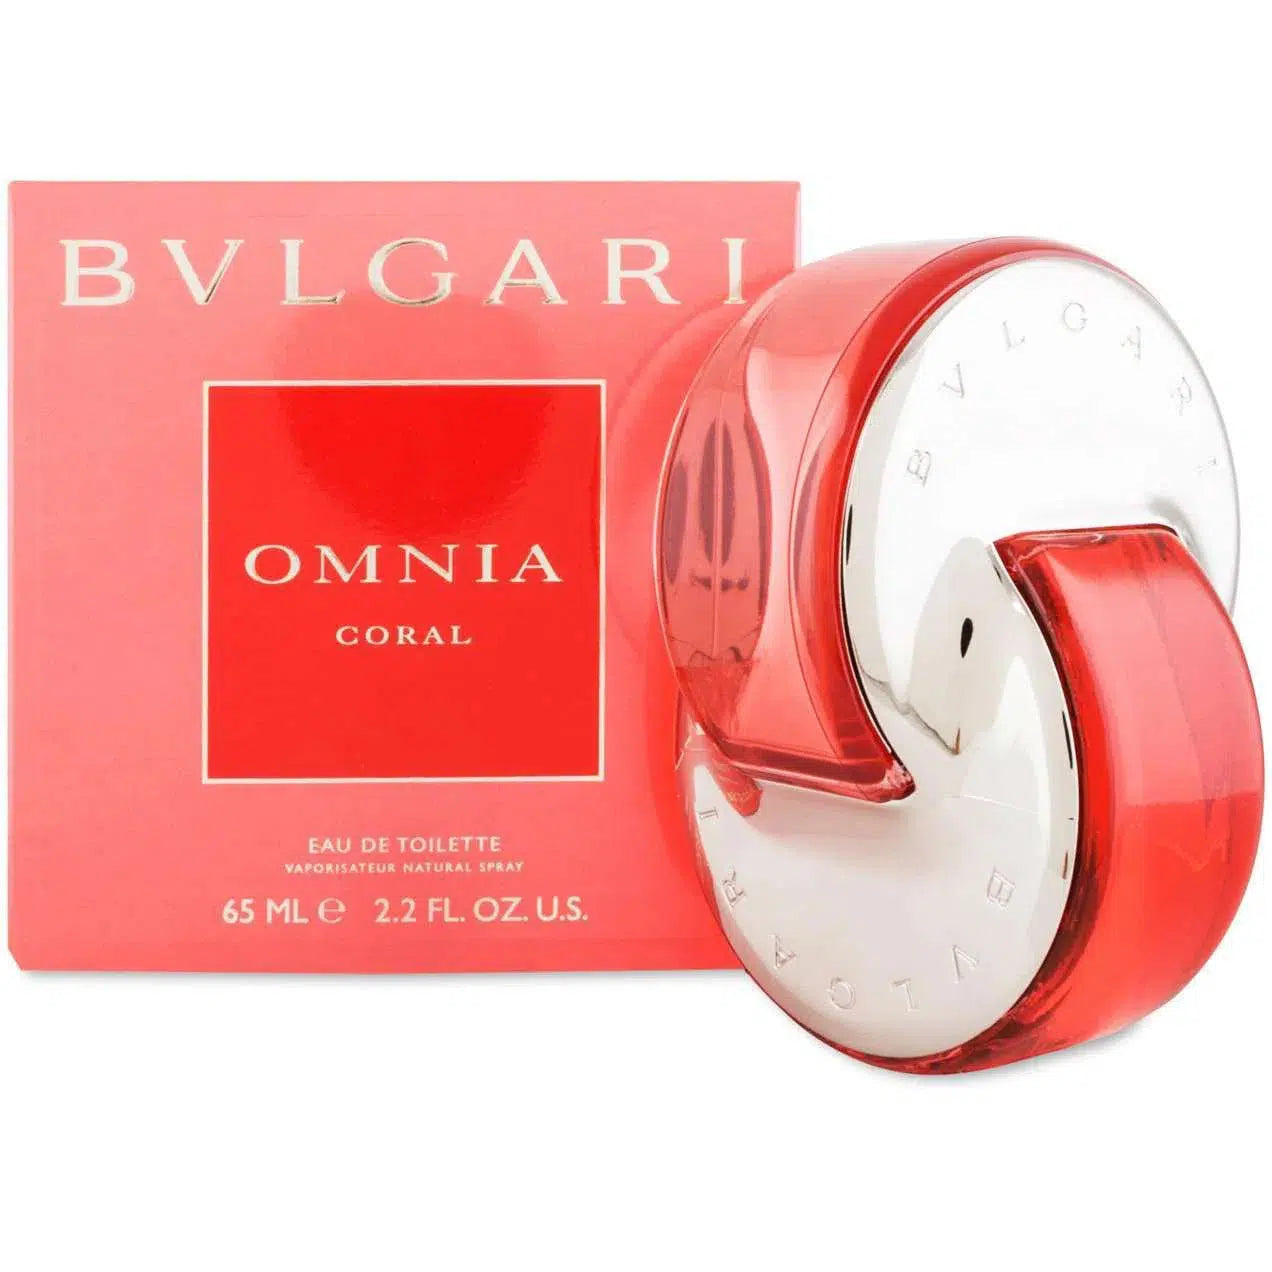 Bvlgari Omnia Coral 65ml - Perfume Philippines